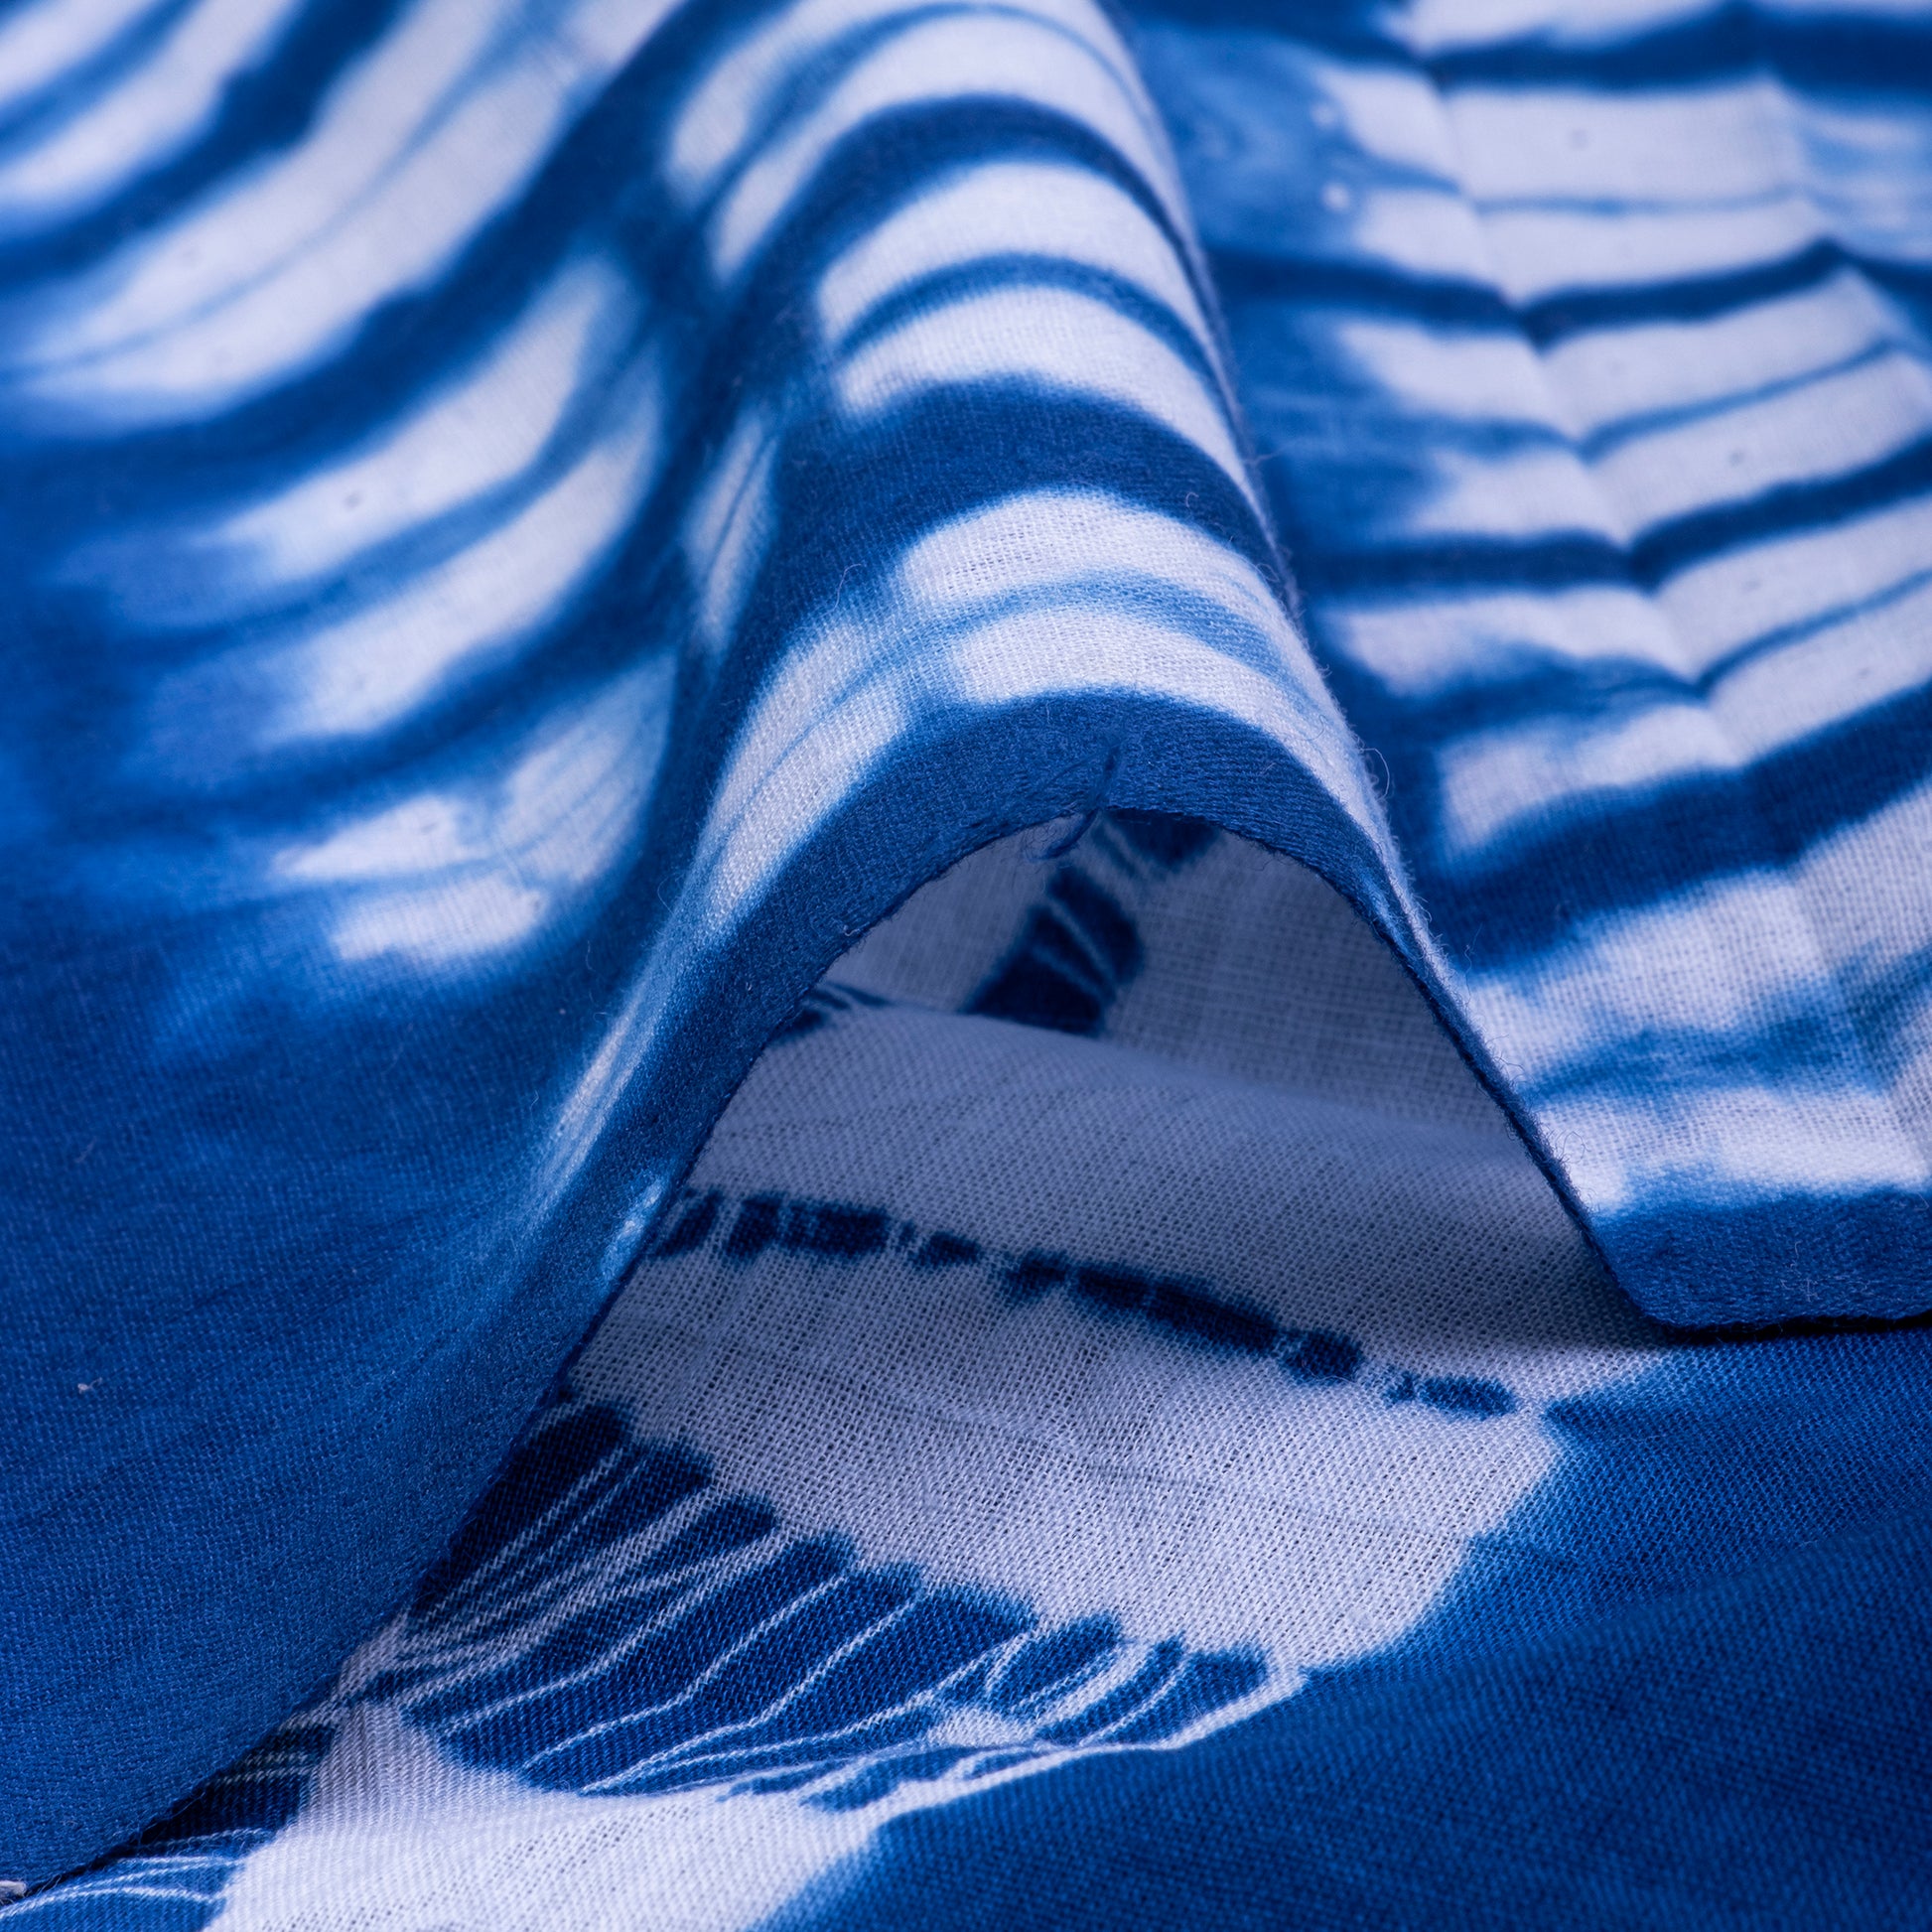 New Blue Shibori Tie Cotton Fabric Dye Online